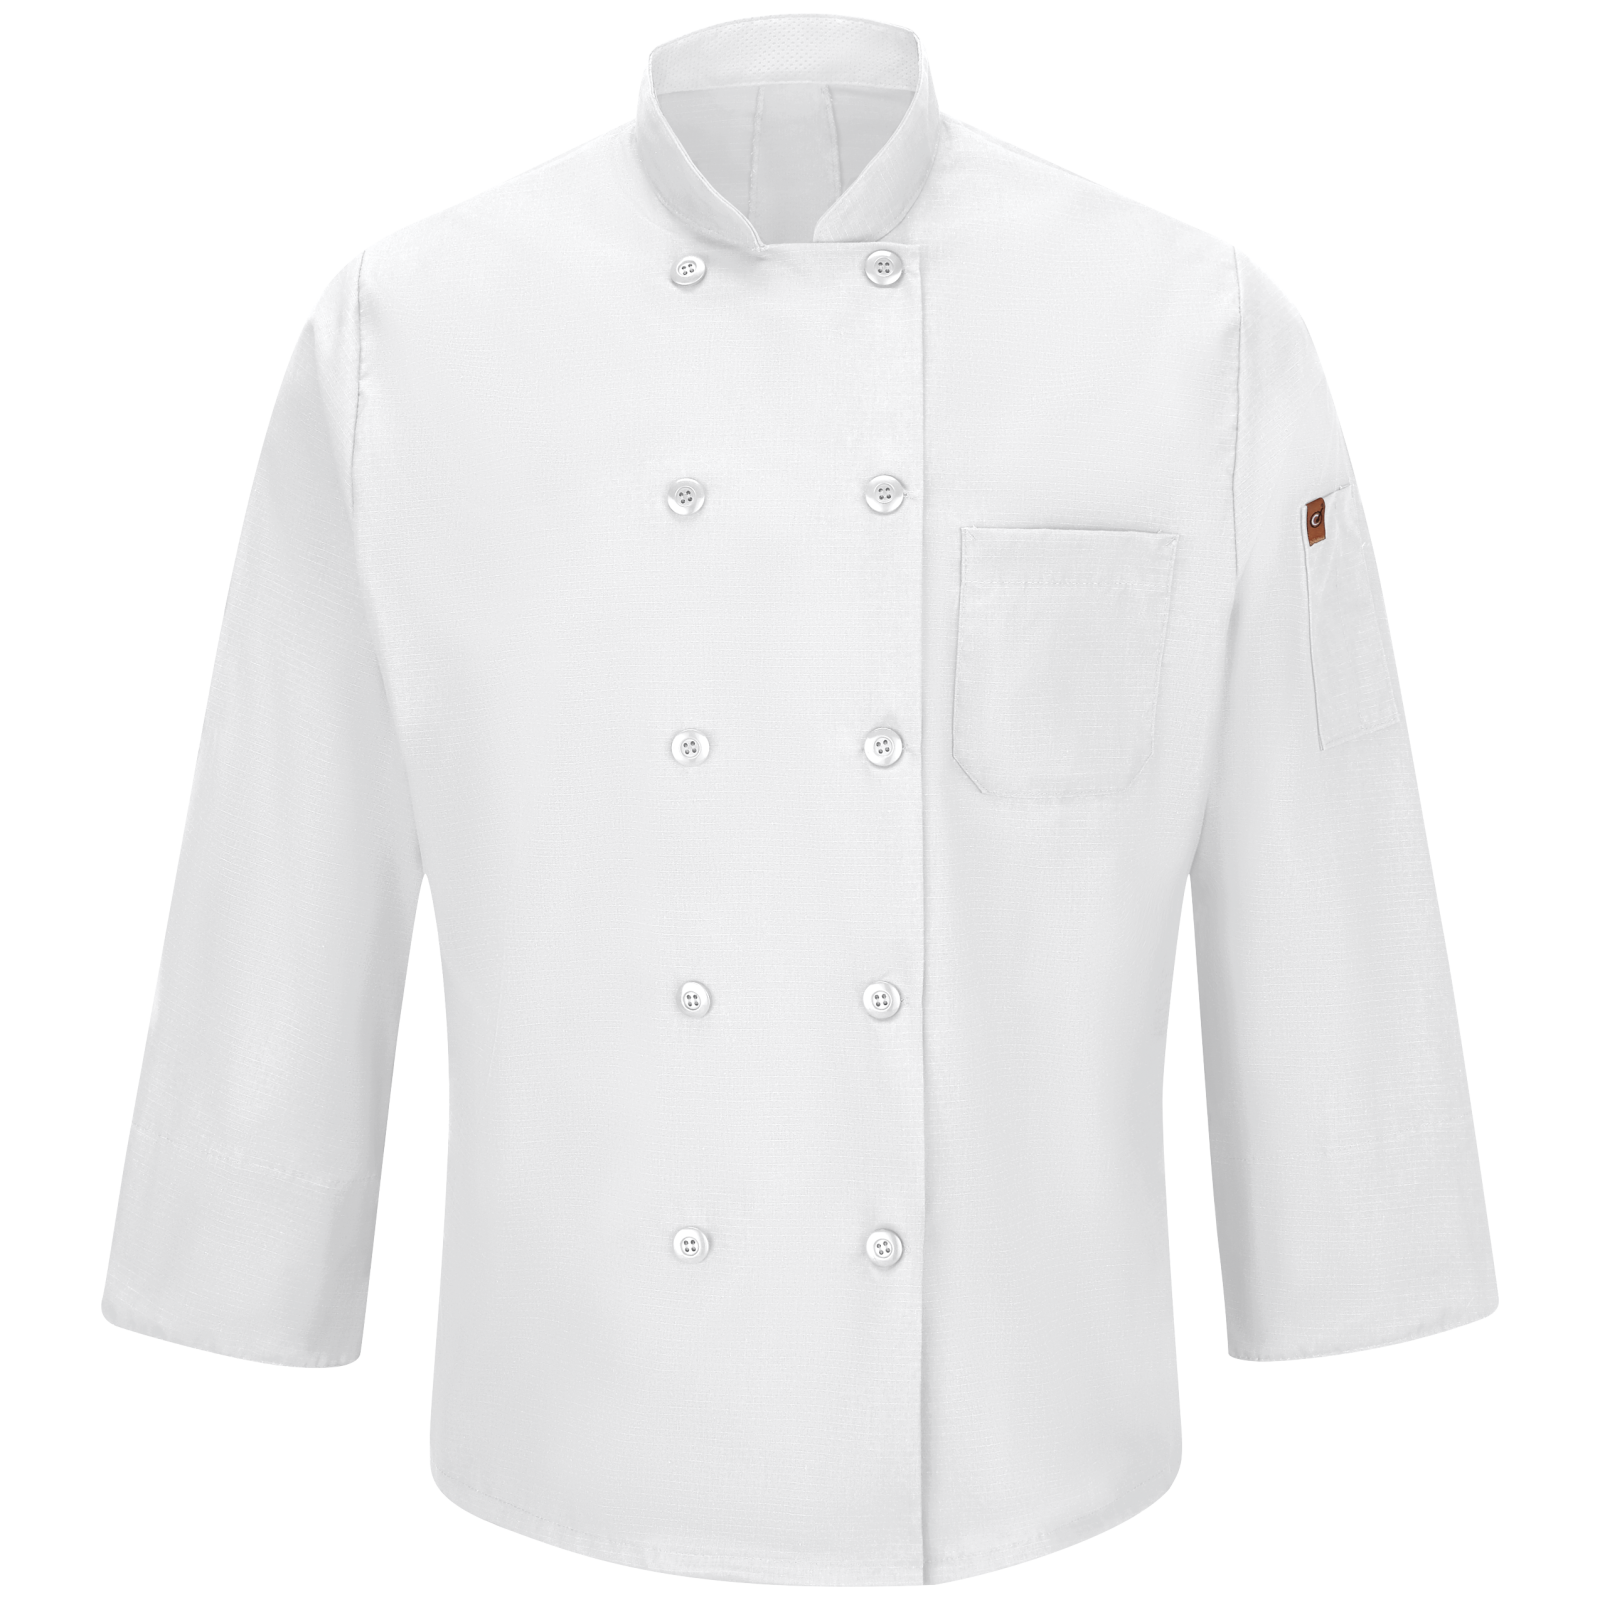 New Master Tunic Chef Coat White With Black Cuffs Size M w/free black apron& hat 